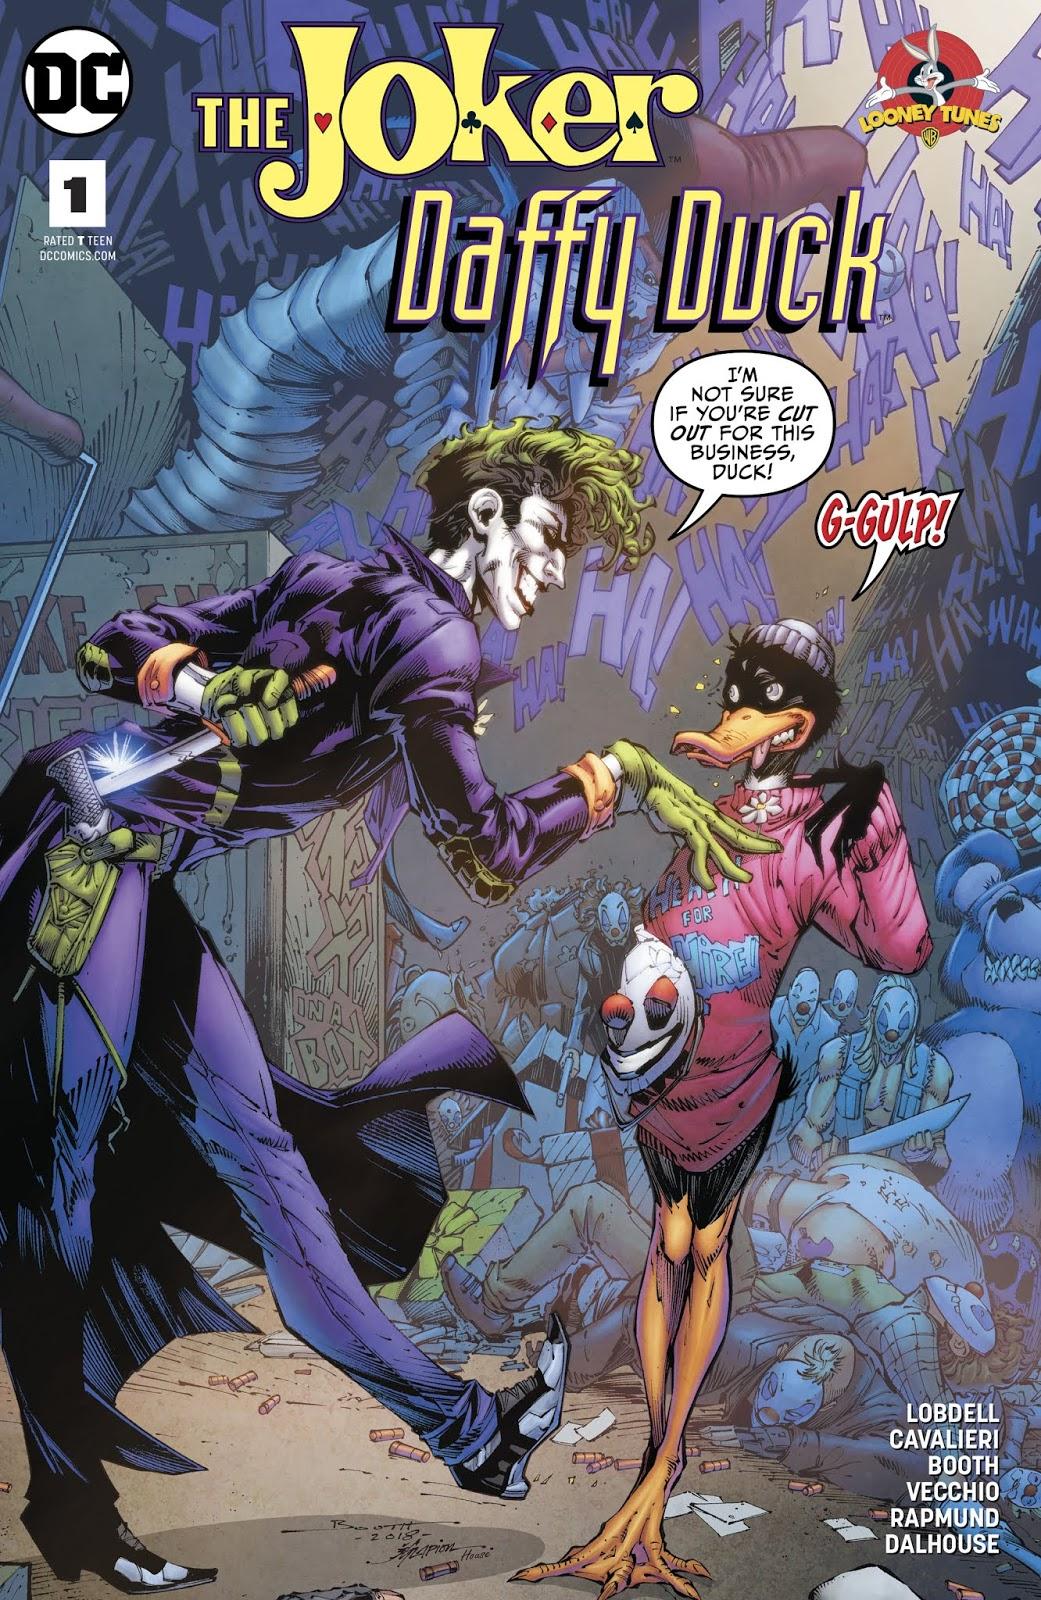 The Joker/Daffy Duck Special Vol. 1 #1